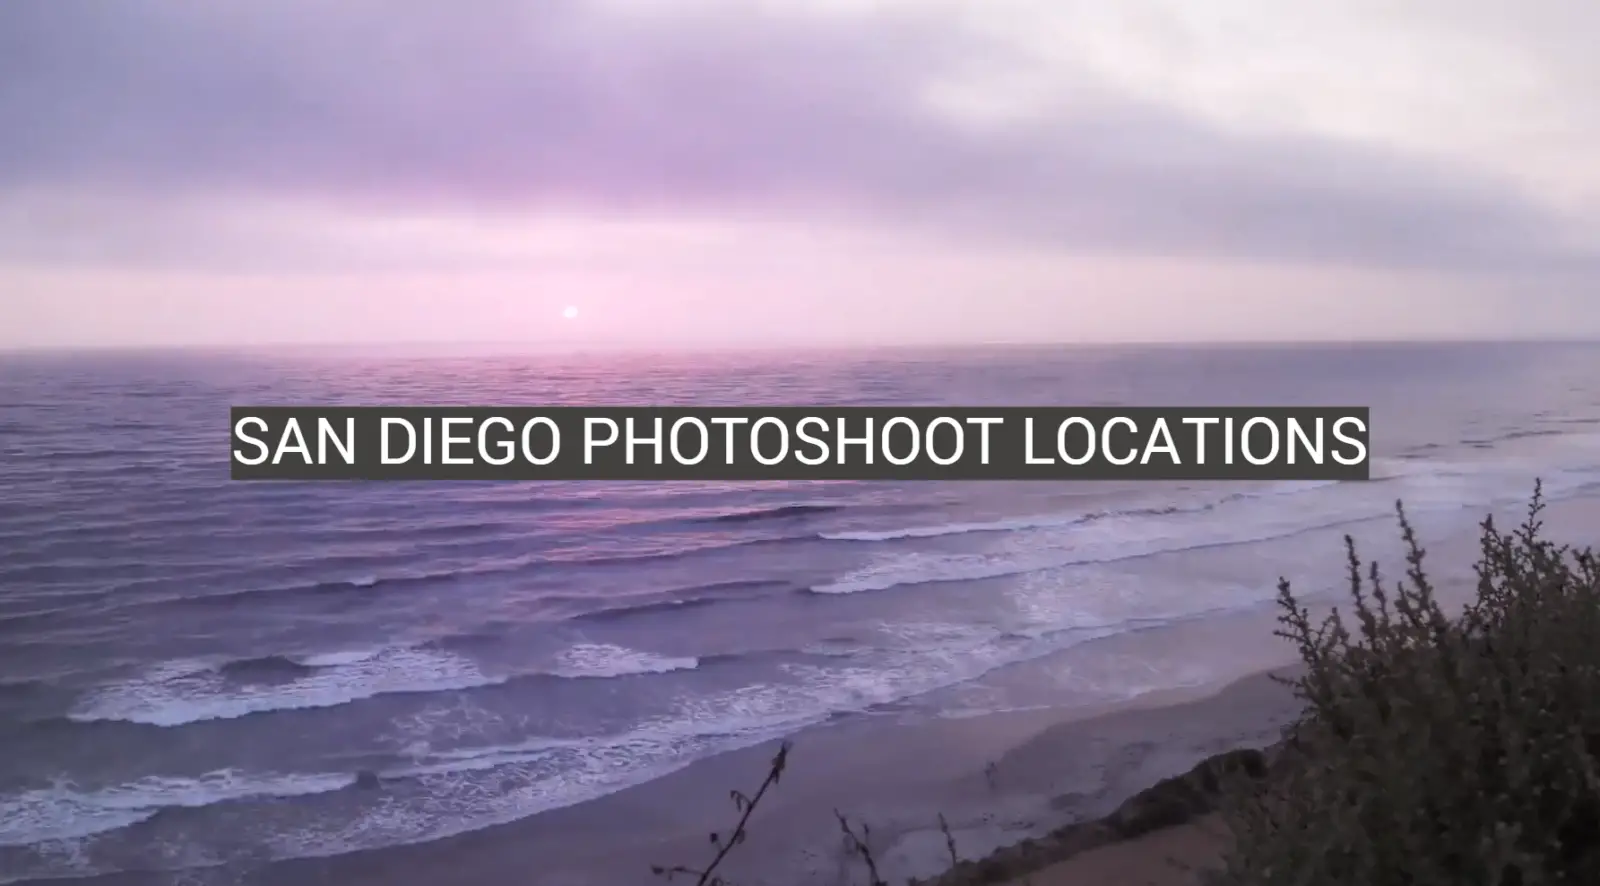 San Diego Photoshoot Locations